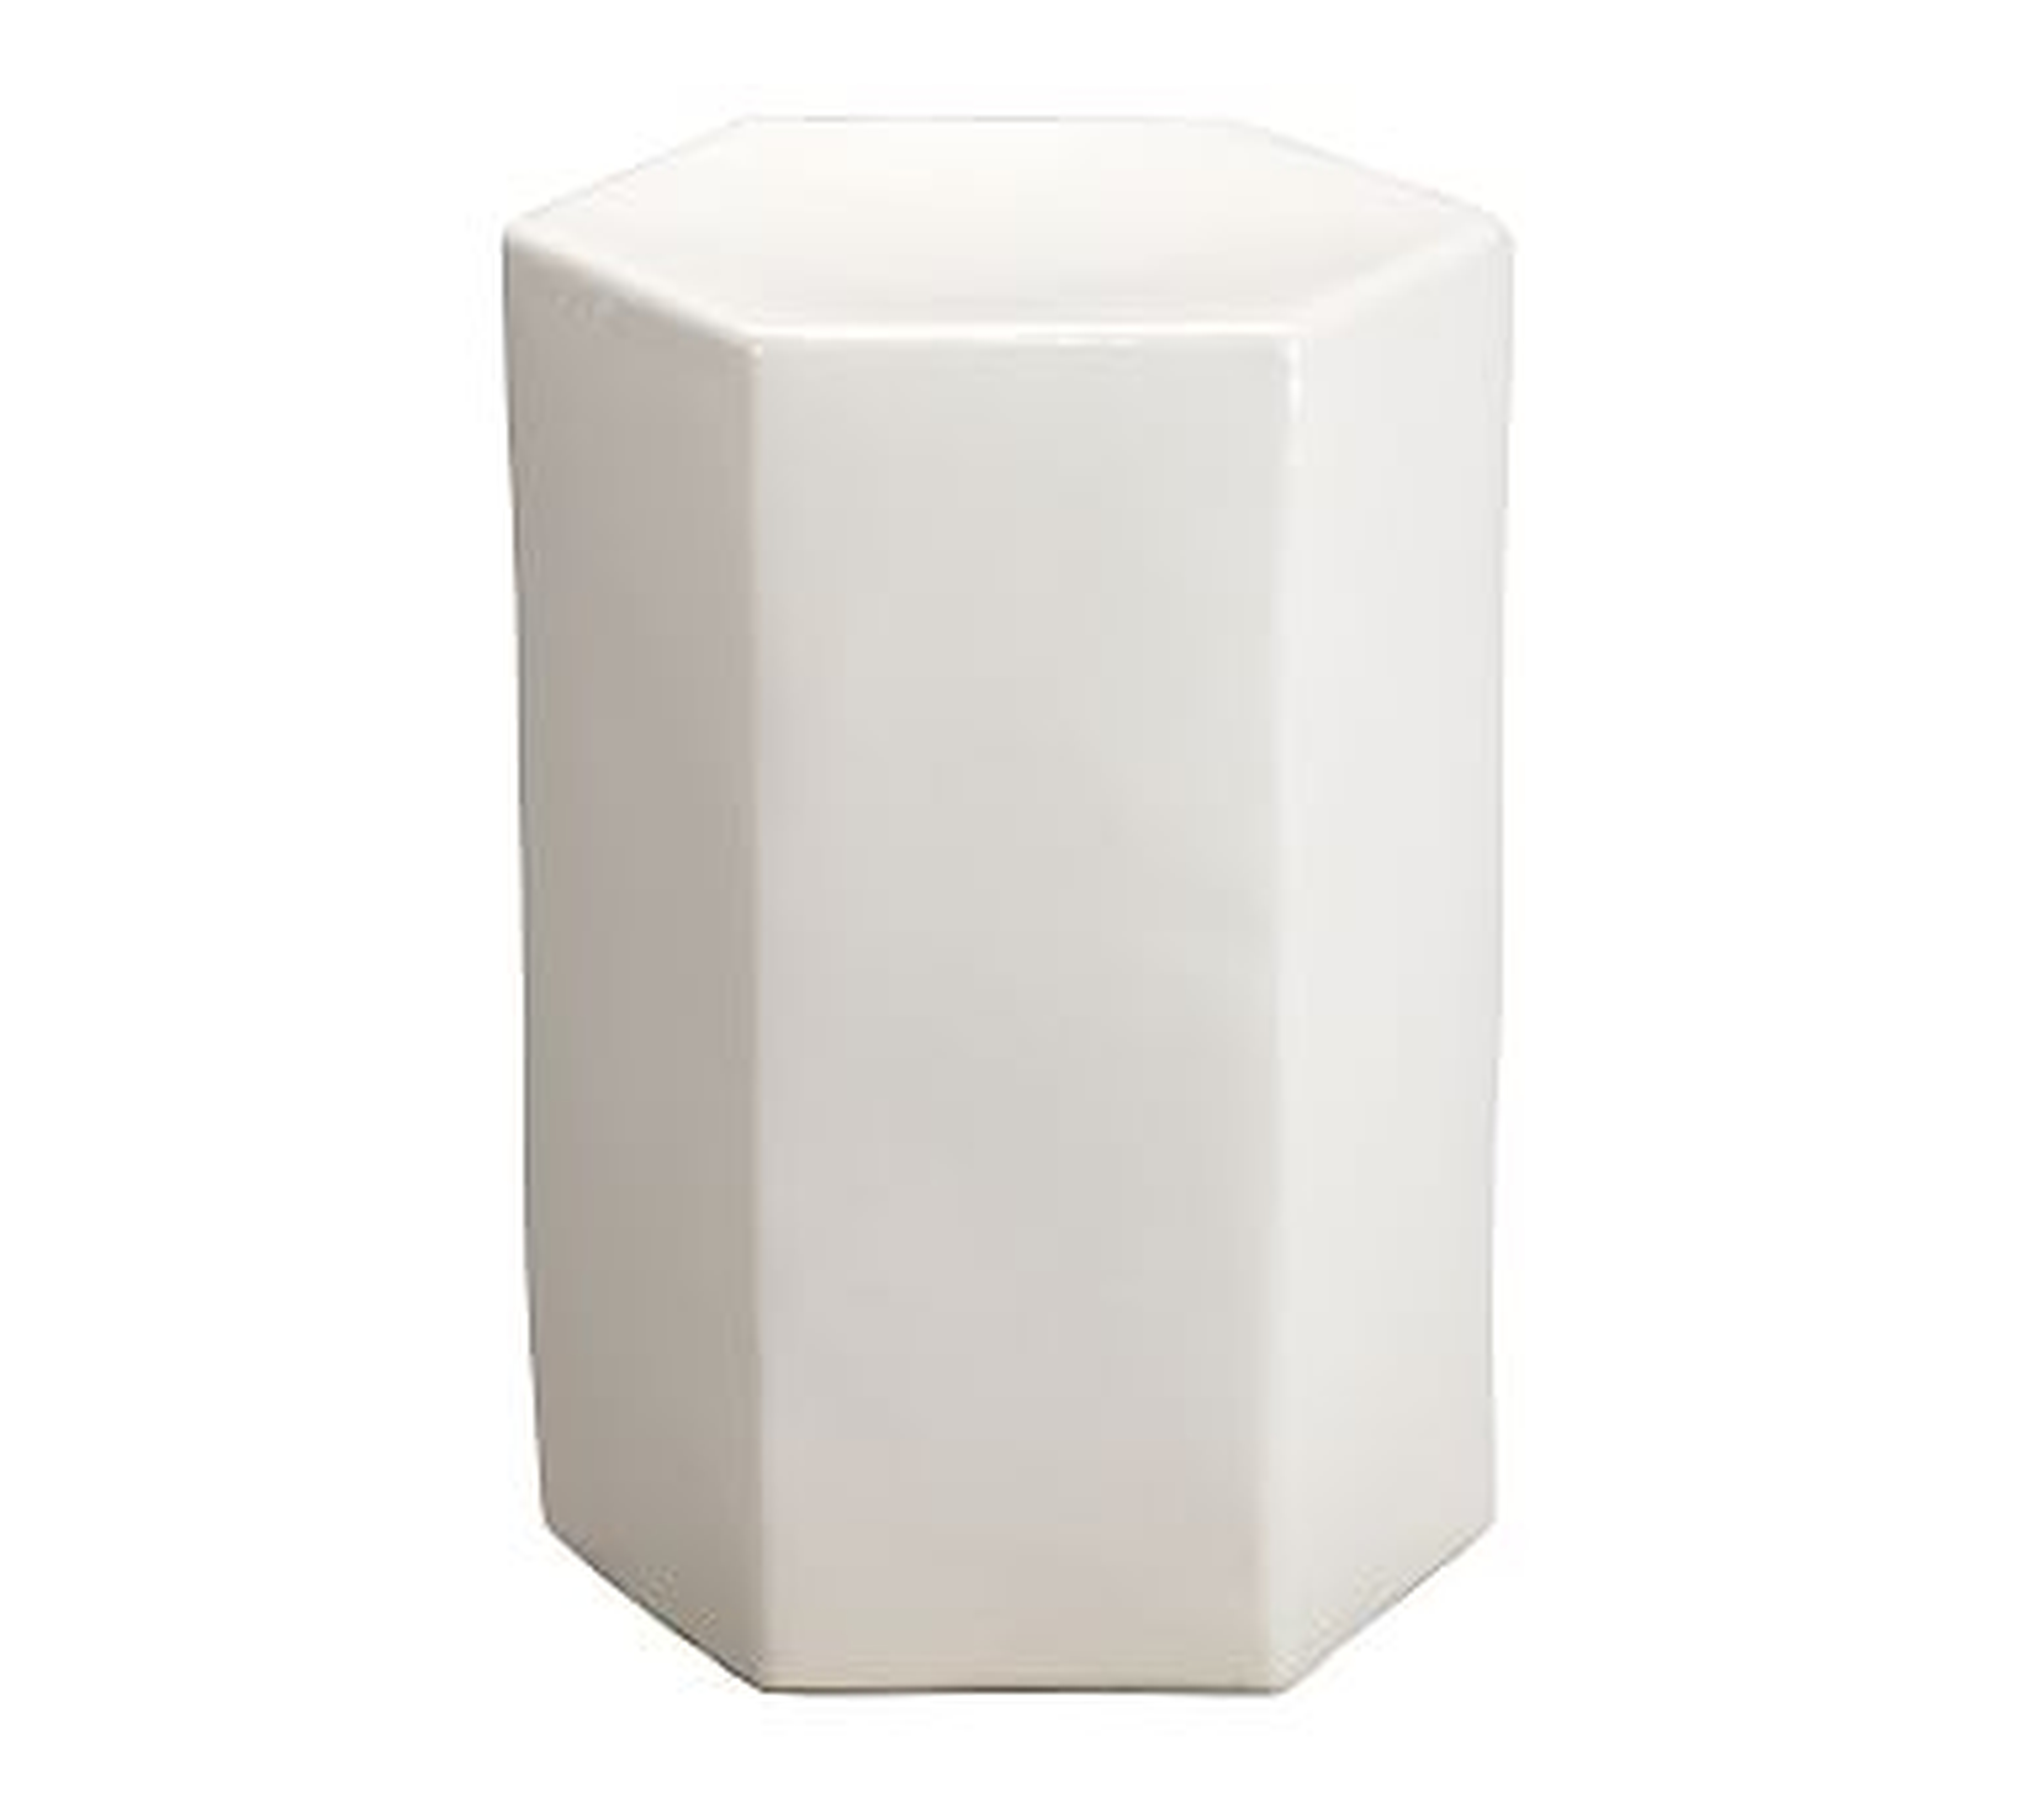 Croft Ceramic Side Table, White, Small - Pottery Barn